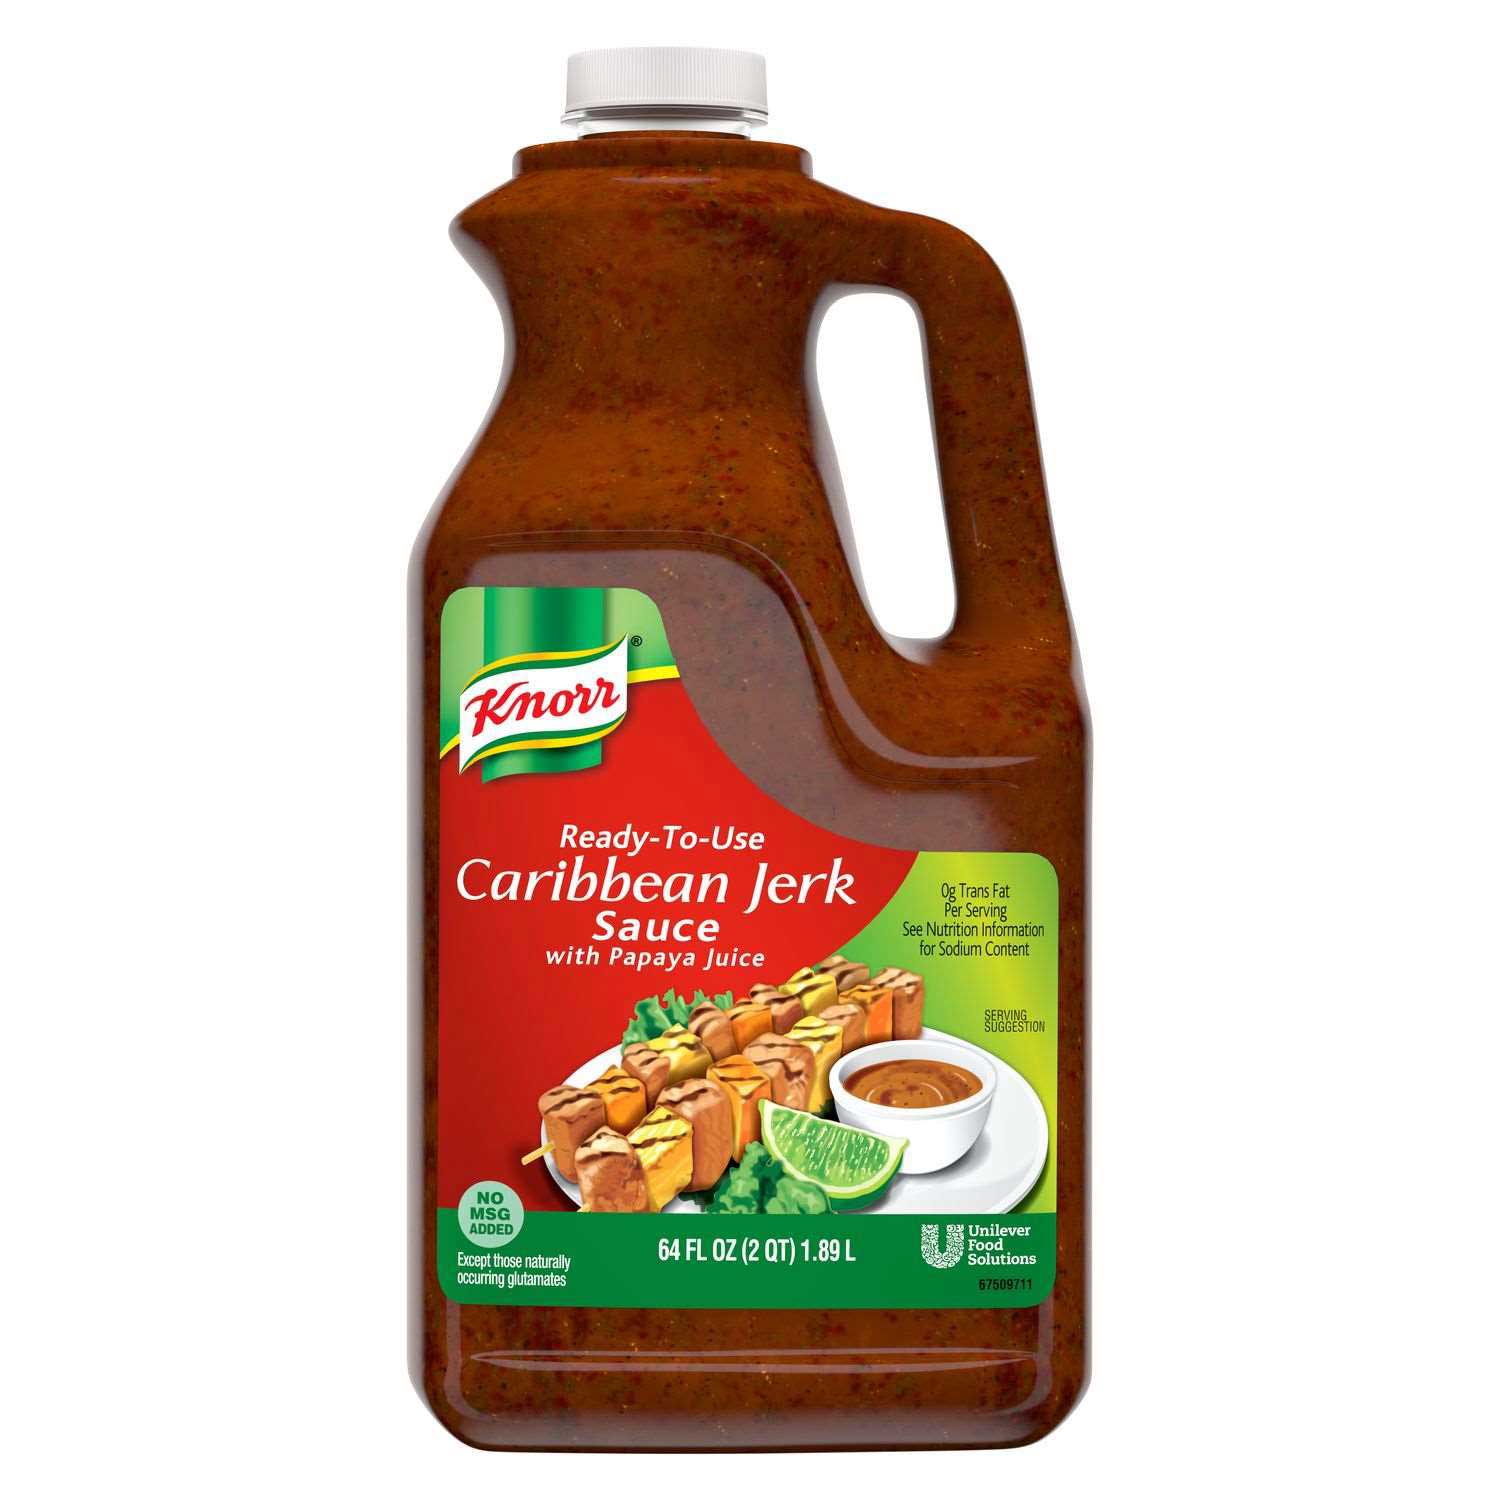 Single Knorr Professional Ready-to-Use Caribbean Jerk Sauce with Papaya Juice Jug, 0.5 Gallon